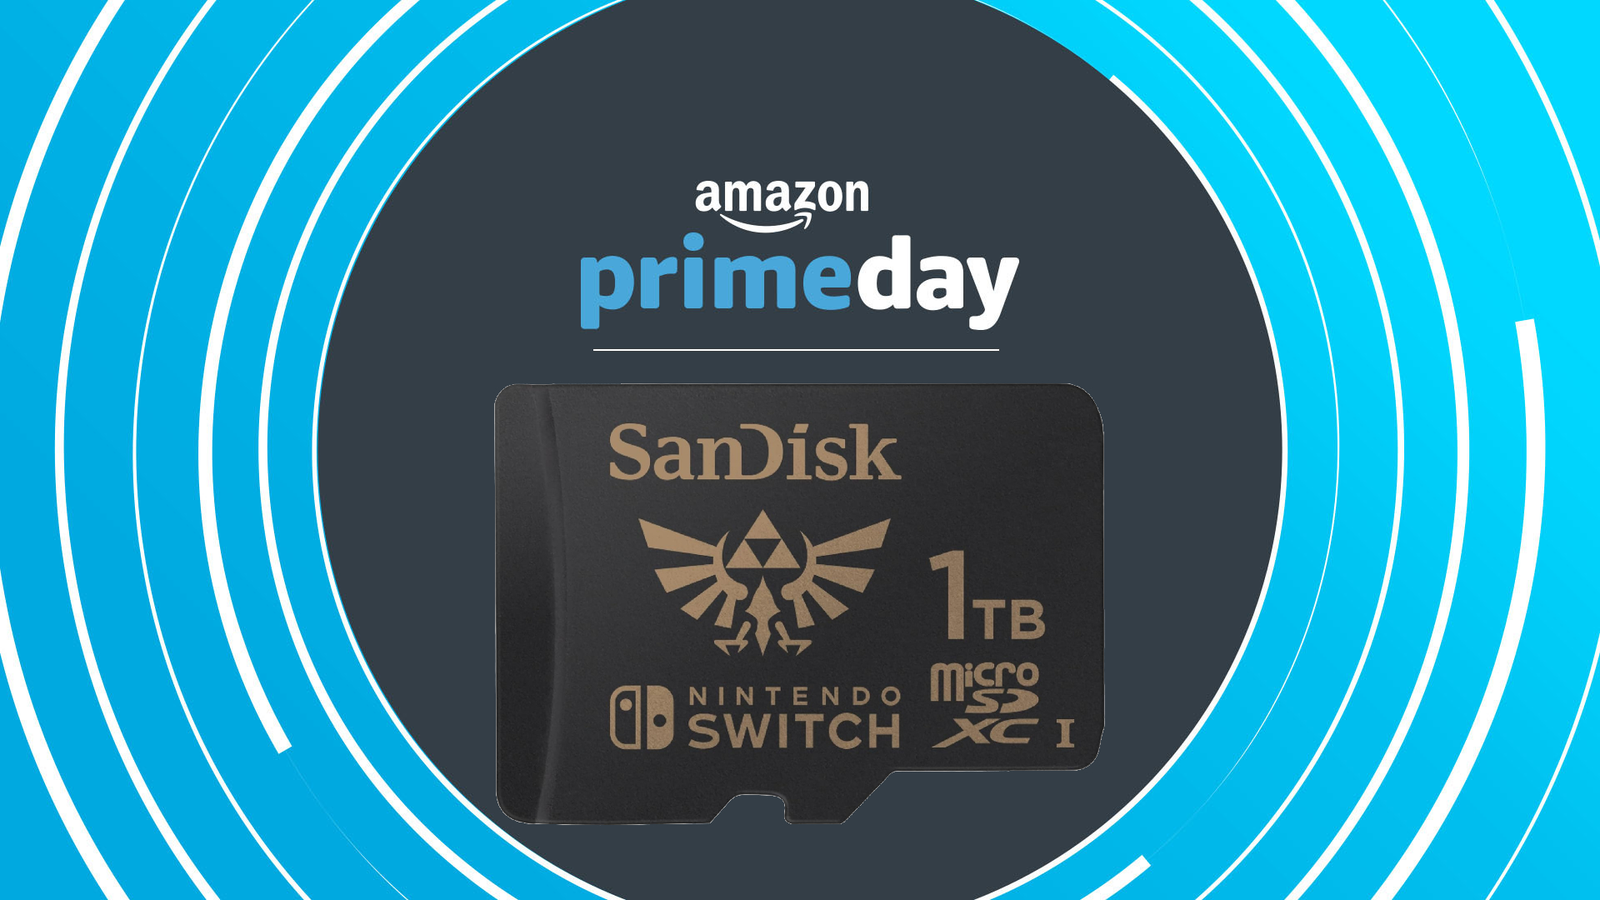 SanDisk 1TB MicroSDXC card for Nintendo Switch